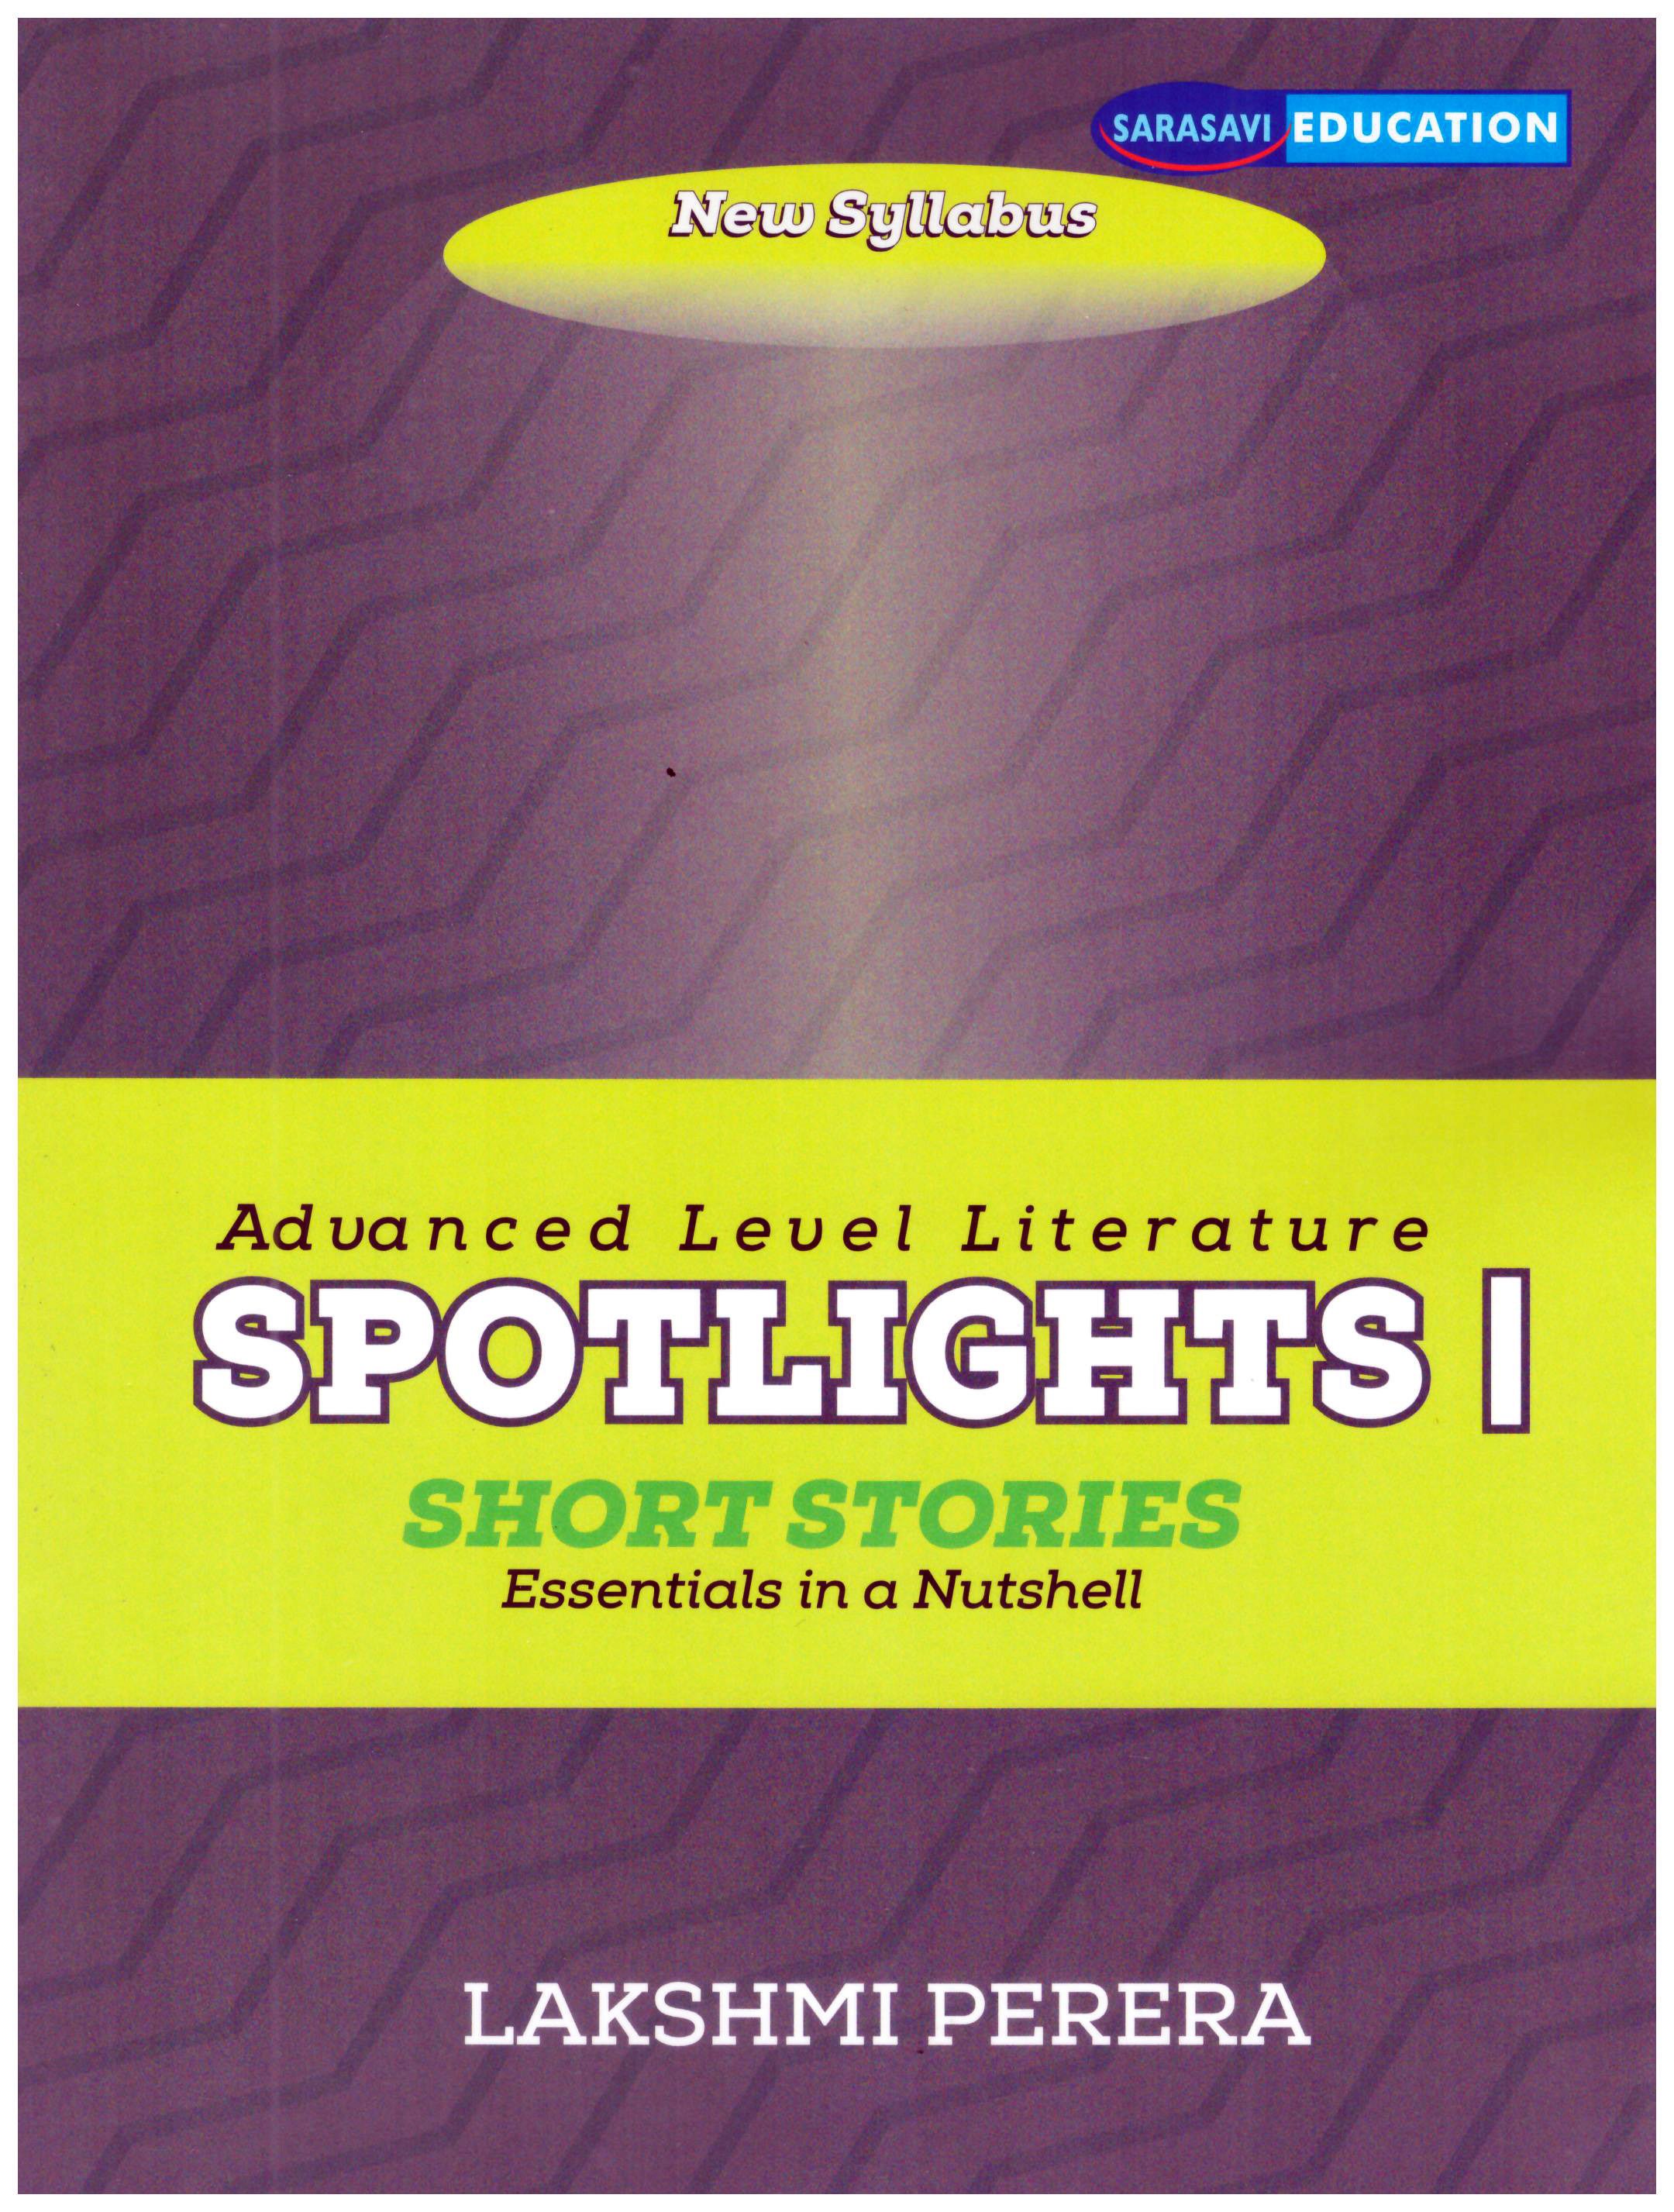 A/L Literature Spotlights 1Short Stories Essentials in a Nutshell